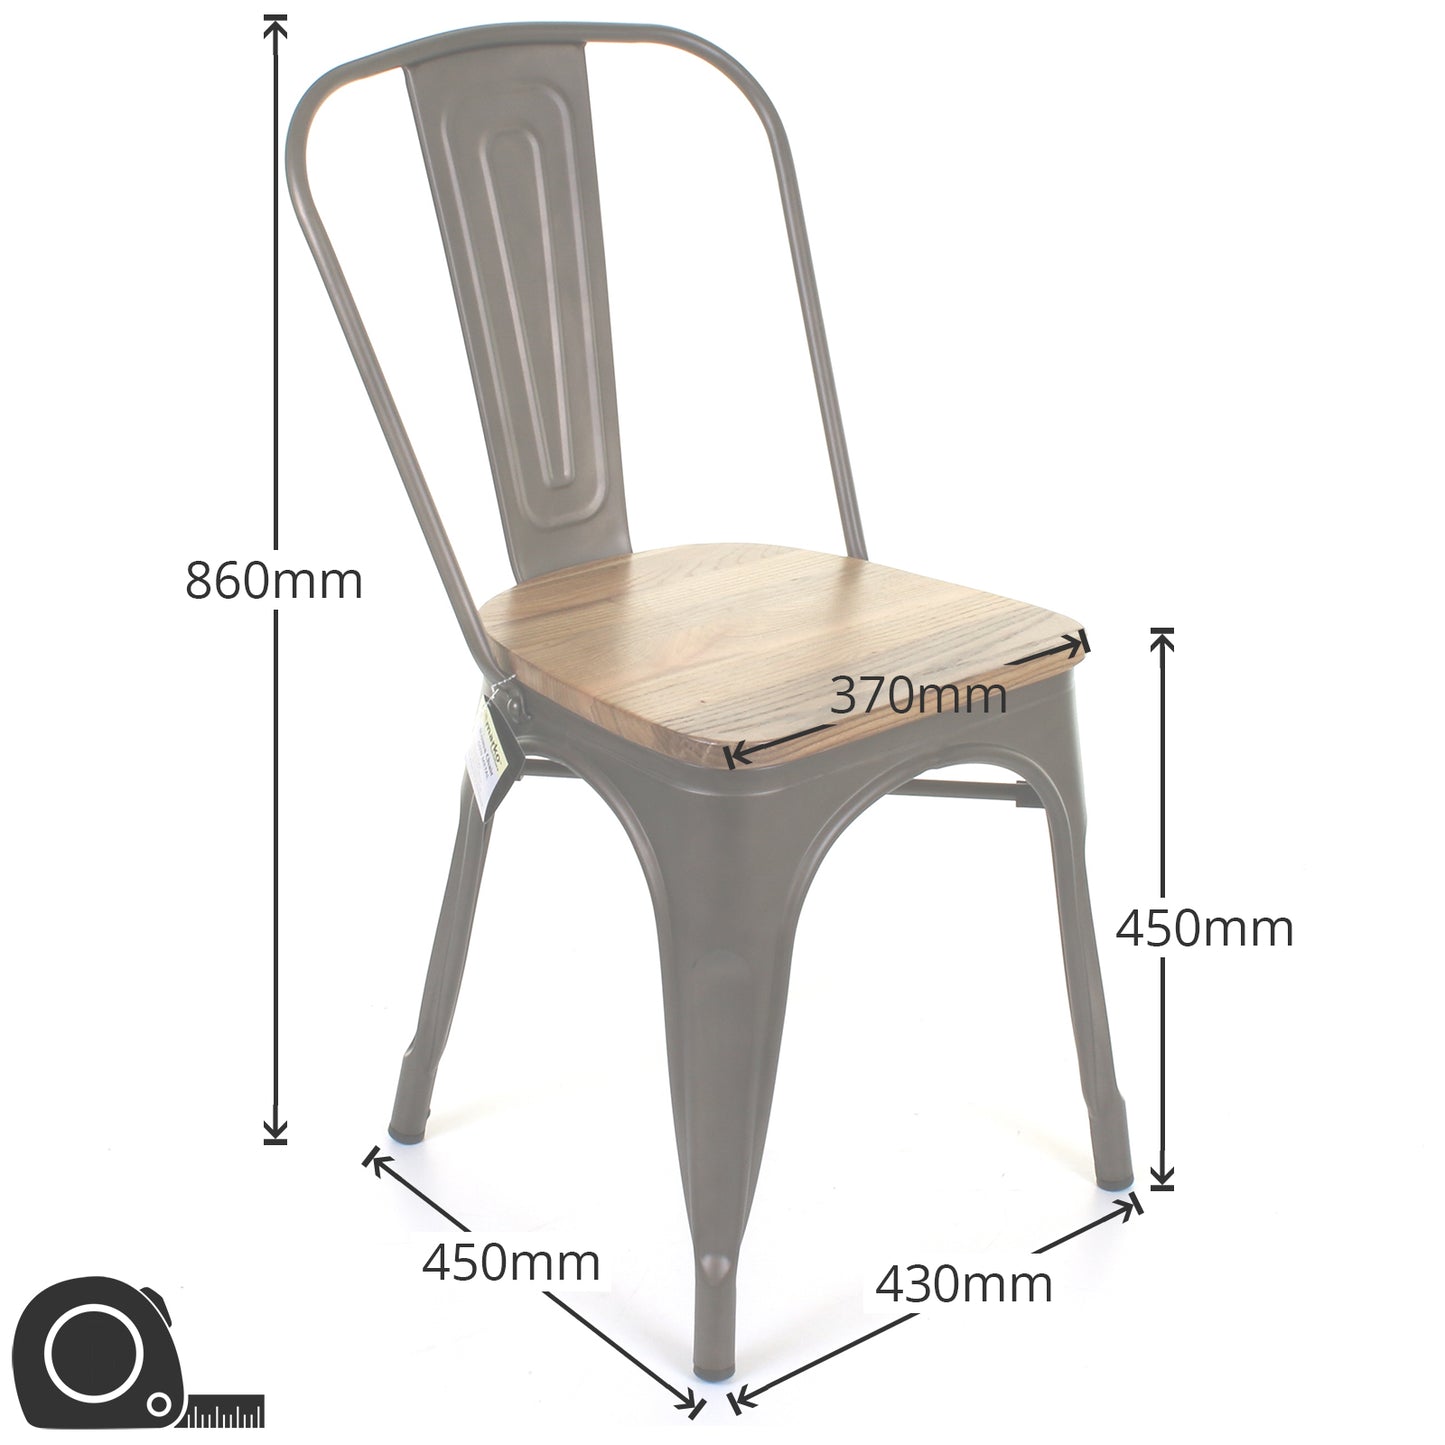 9PC Taranto Table, 5 Palermo Chairs & 3 Rho Stools Set - Gun Metal Grey